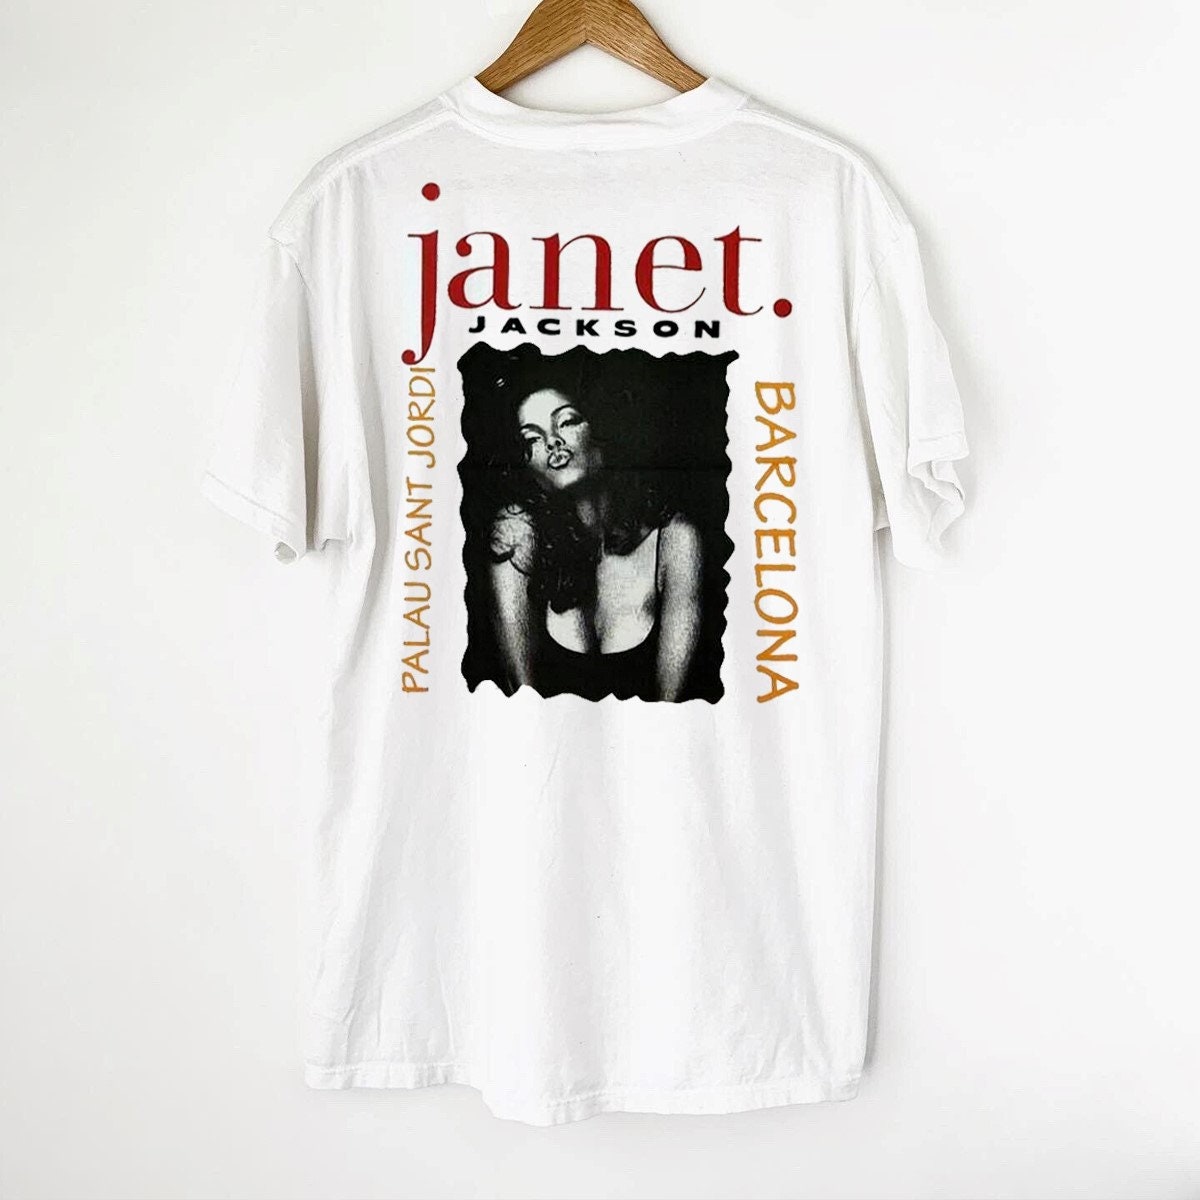 Janet Jackson Palau Sant Jordi Barcelona Tour 1995 TShirt, Janet Jackson World Tour Barcelona Shirt, Janet Jackson Tour Shirt, 90s Music Tee